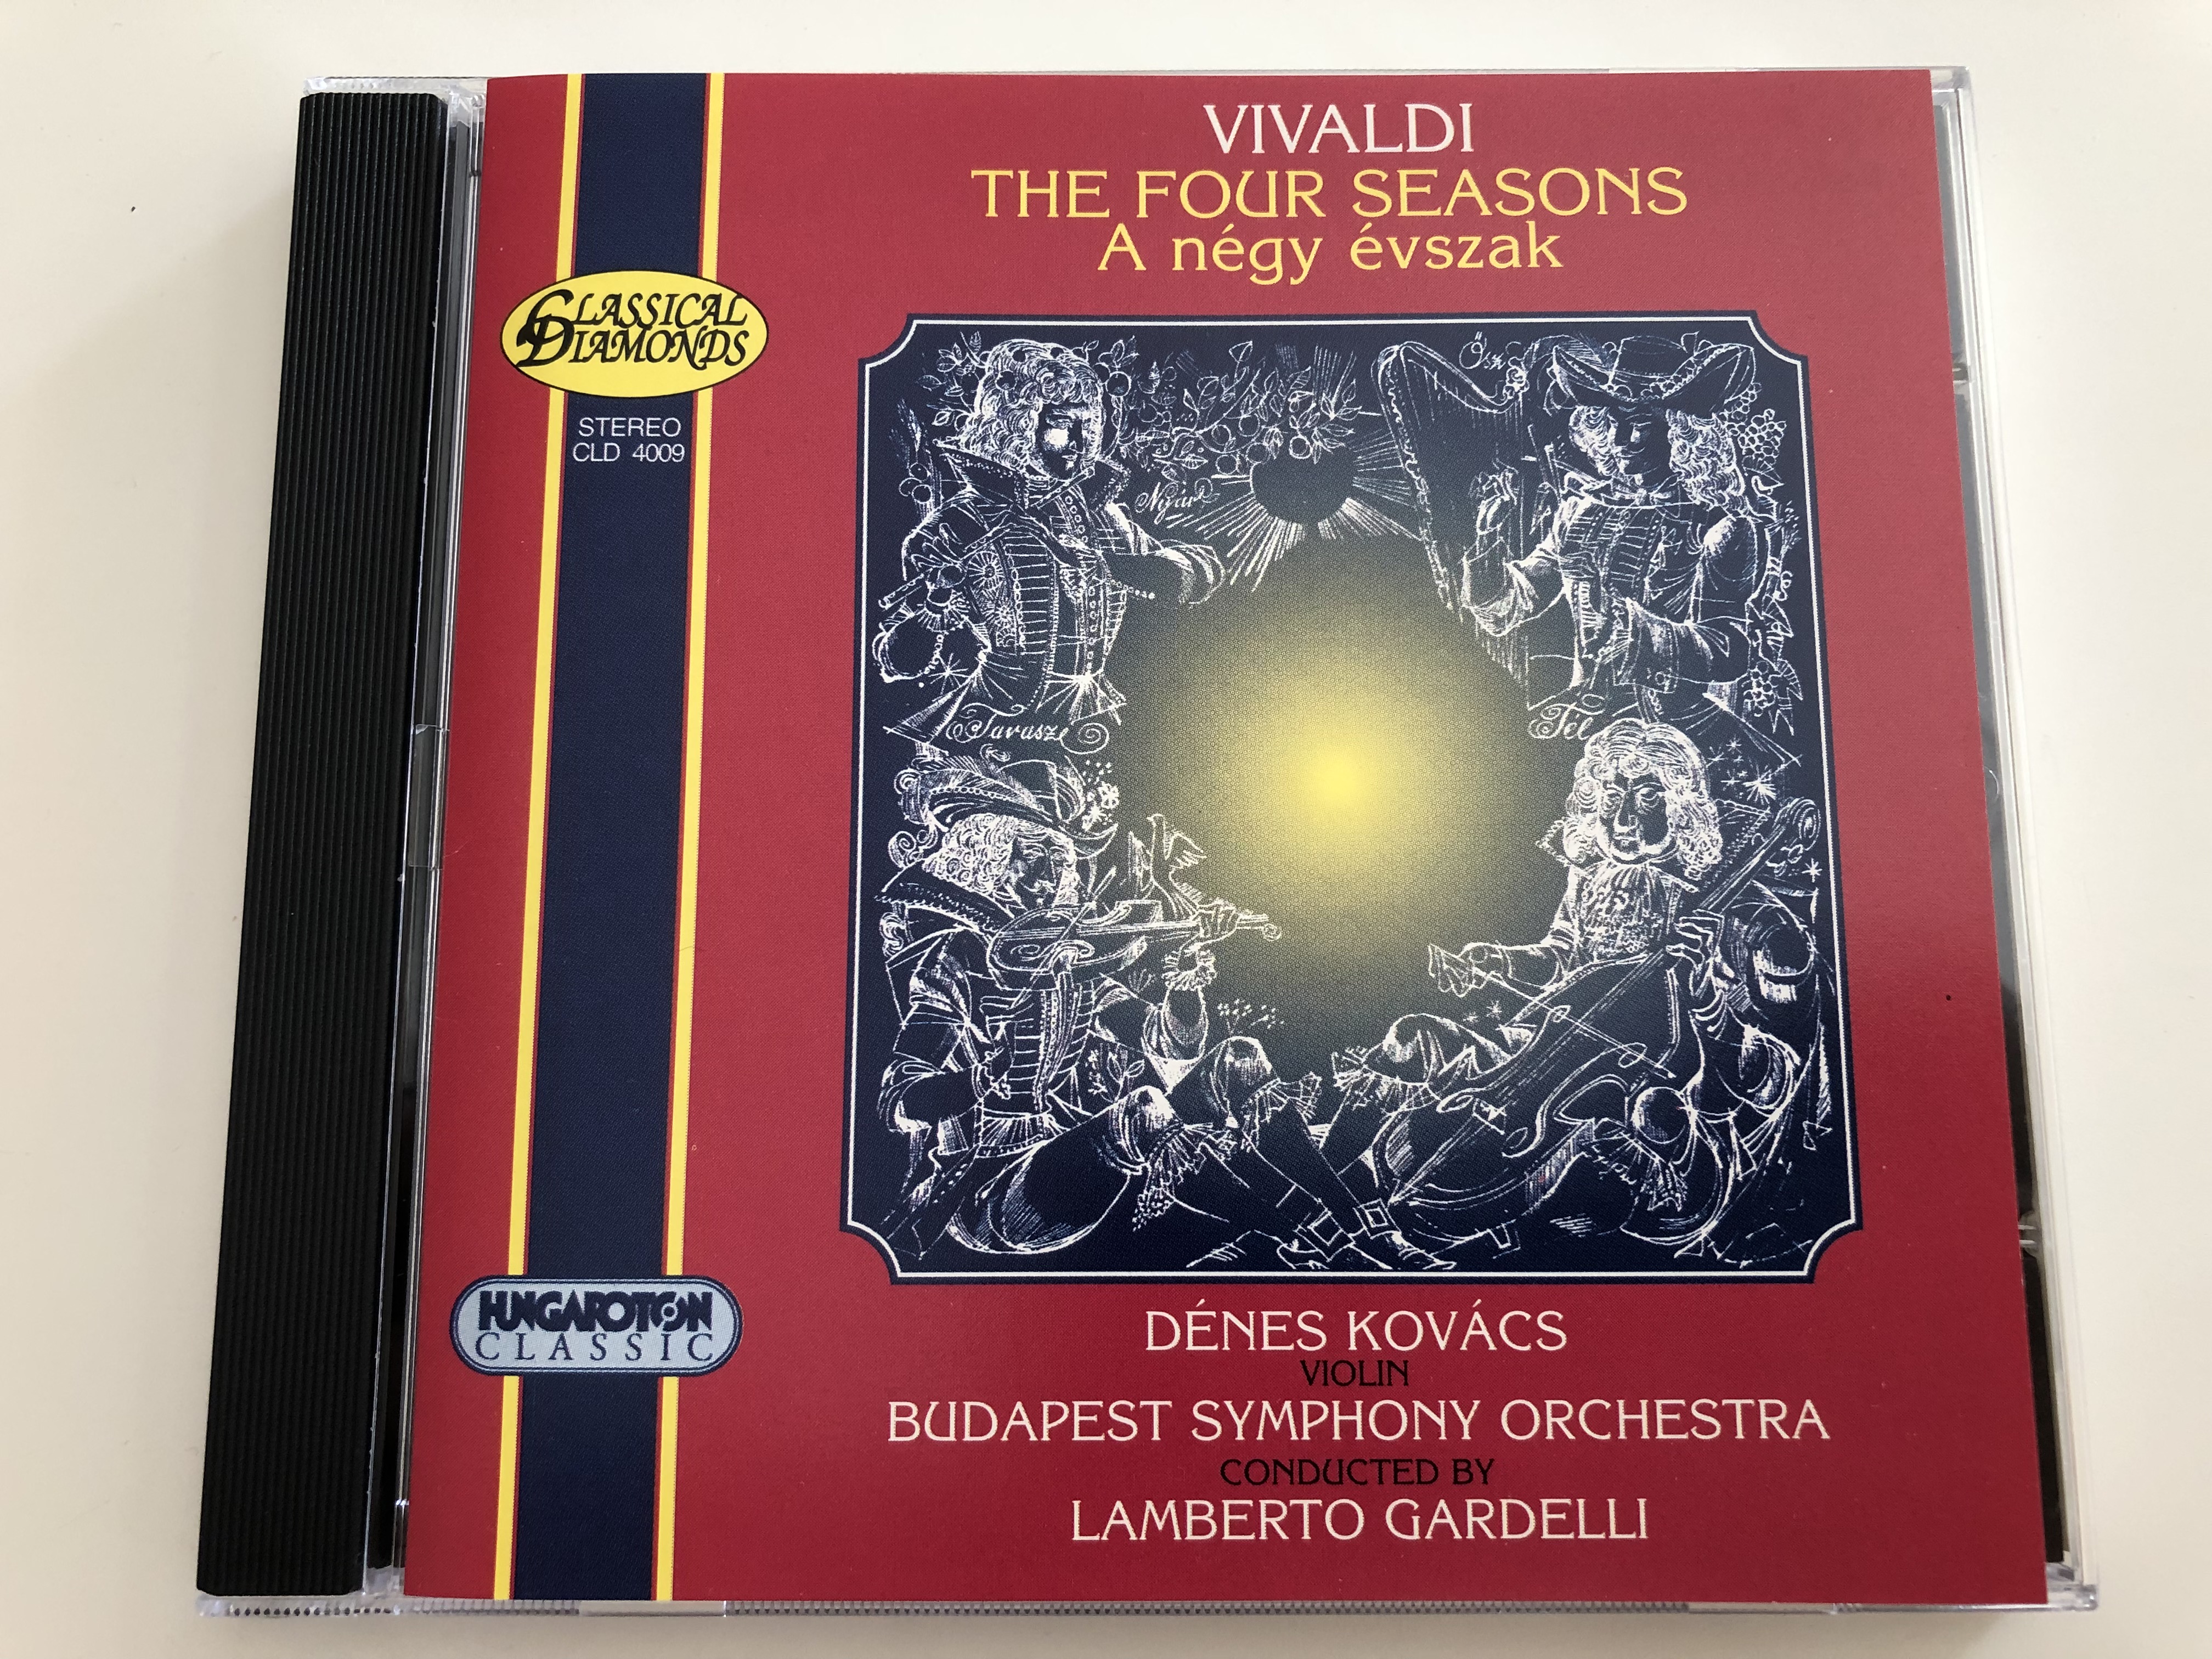 vivaldi-the-four-seasons-a-n-gy-vszak-d-nes-kov-cs-violin-budapest-symphony-orchestra-conducted-by-lamberto-gardelli-hungaroton-cld-4009-audio-cd-1996-1-.jpg